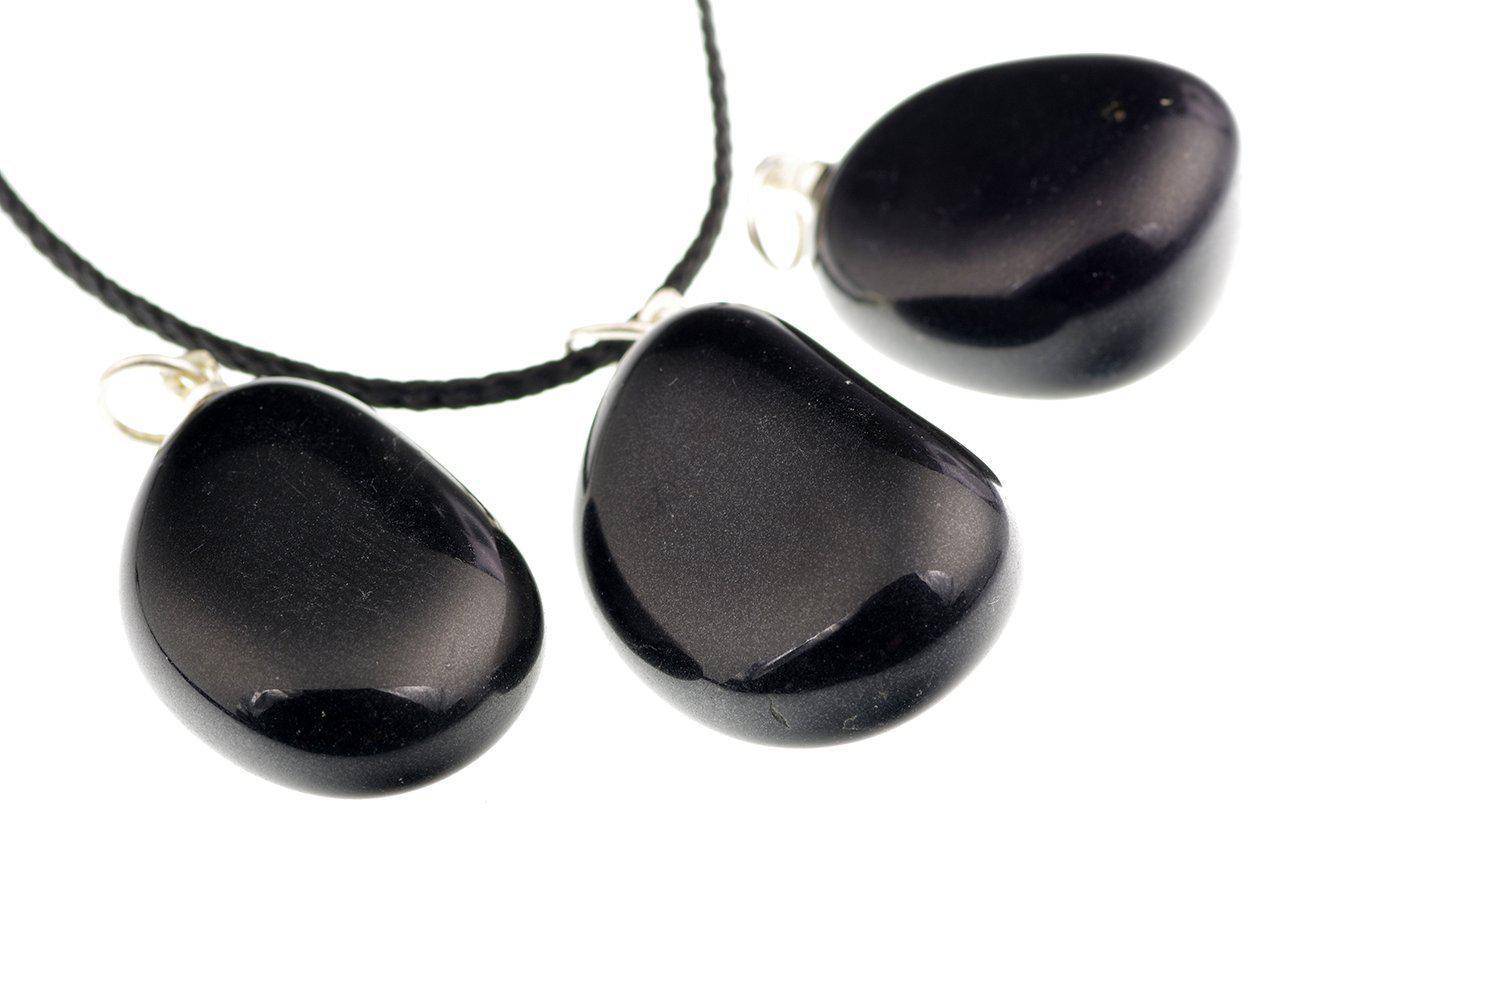 Black onyx pendant – Pebble